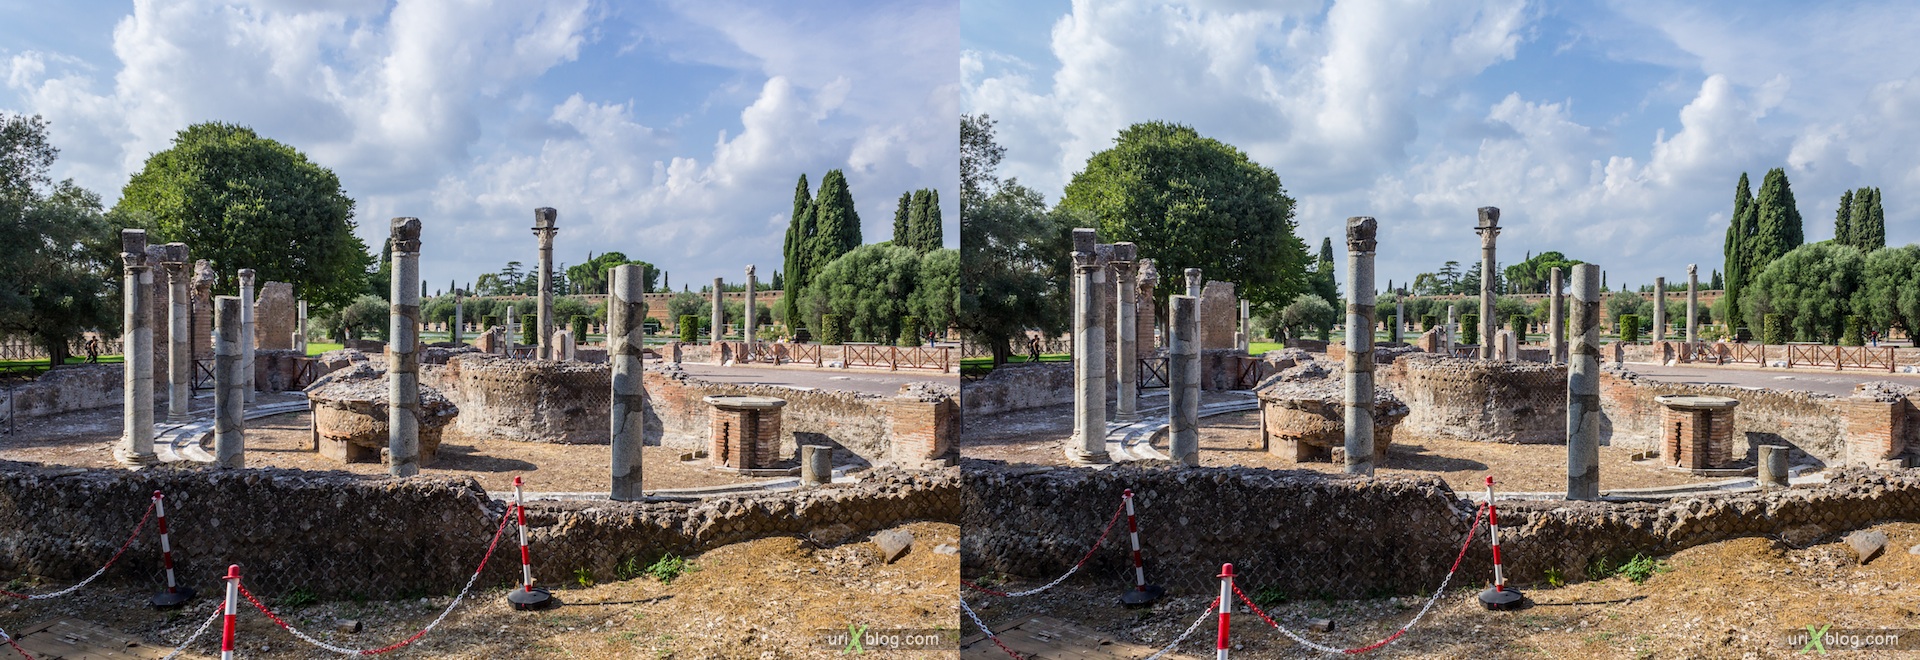 2012, Villa Adriana, Italy, Tivoli, Ancient Rome, 3D, stereo pair, cross-eyed, crossview, cross view stereo pair